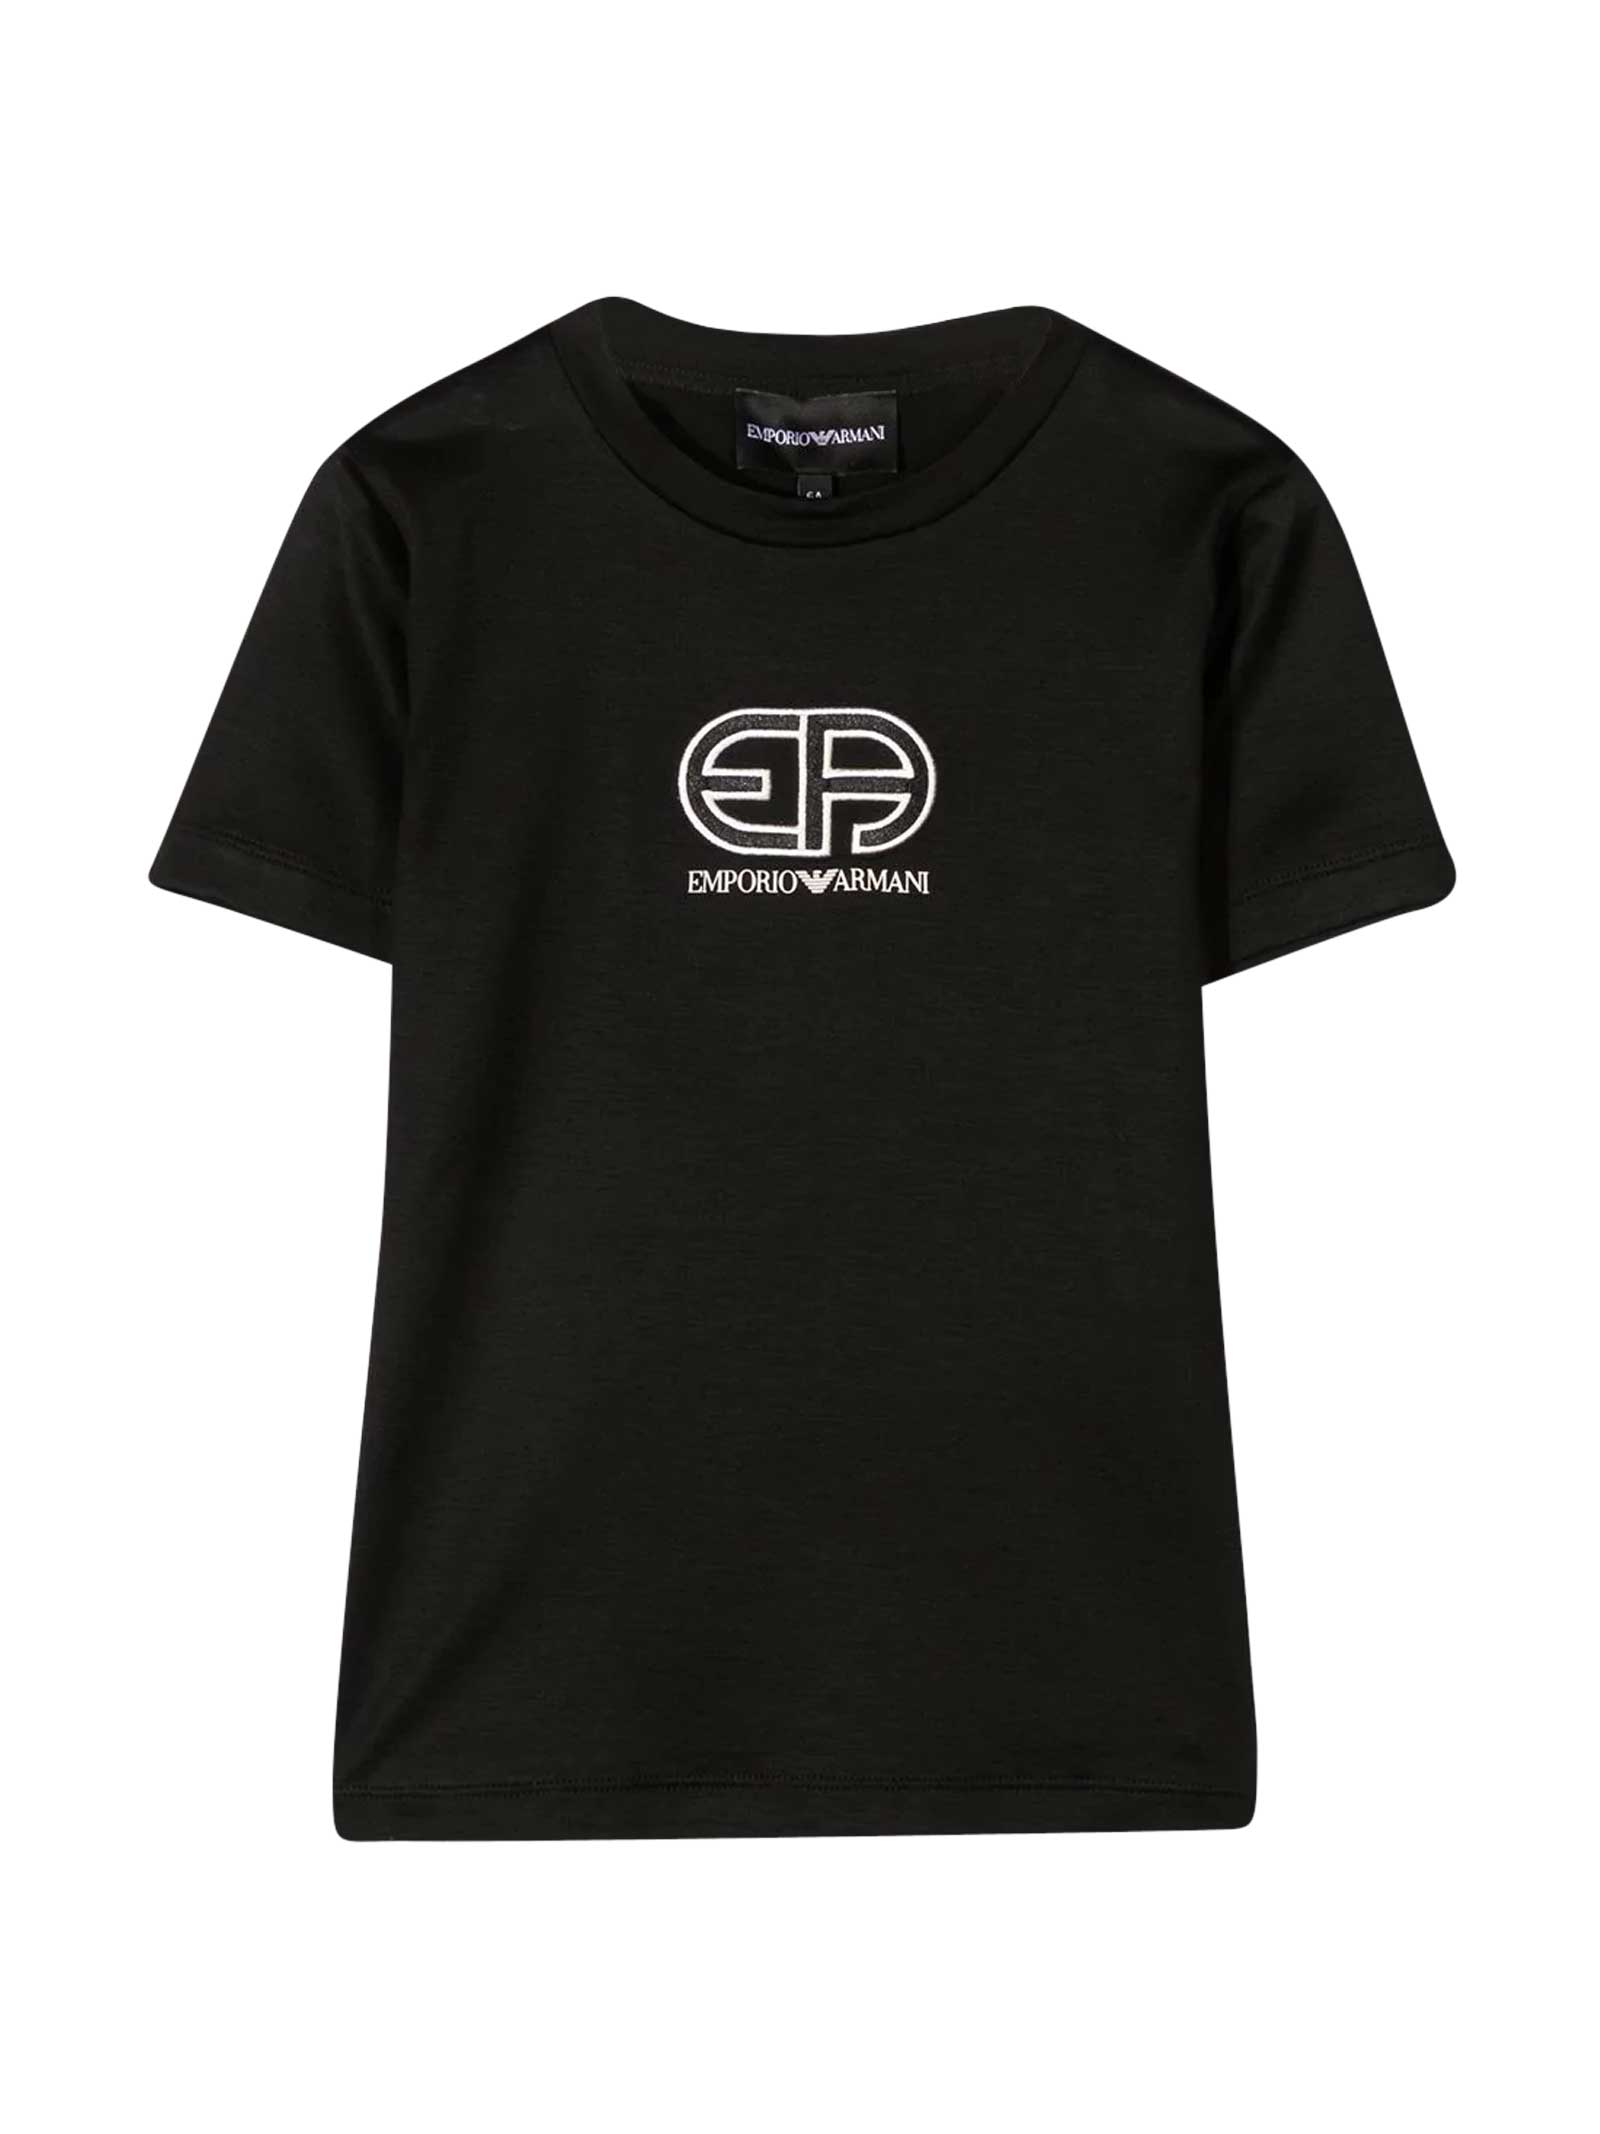 Emporio Armani Teen Black T-shirt